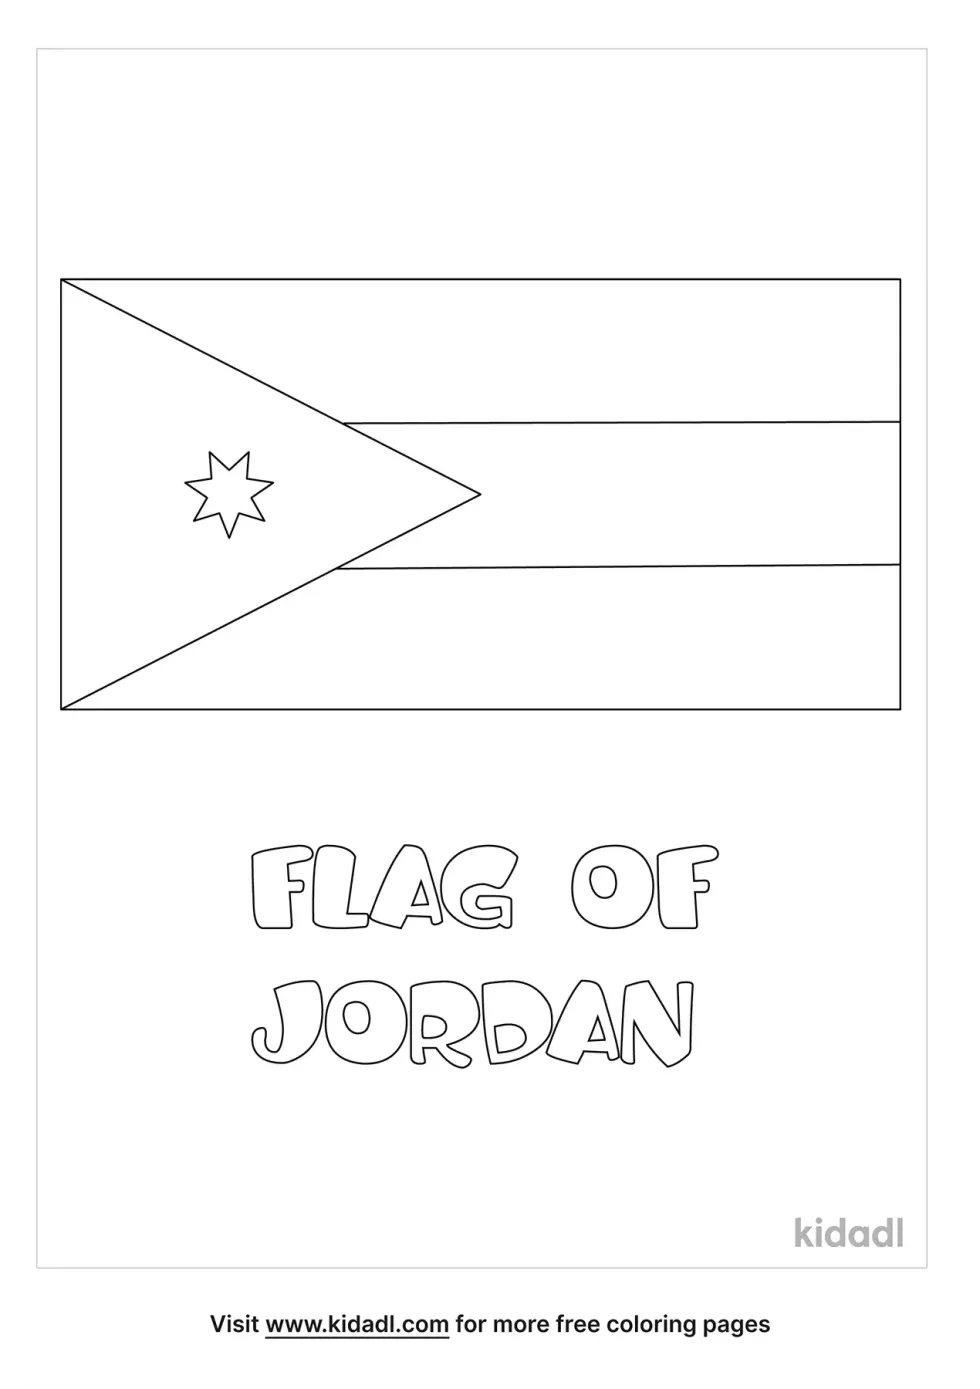 Flag Of Jordan Coloring Page